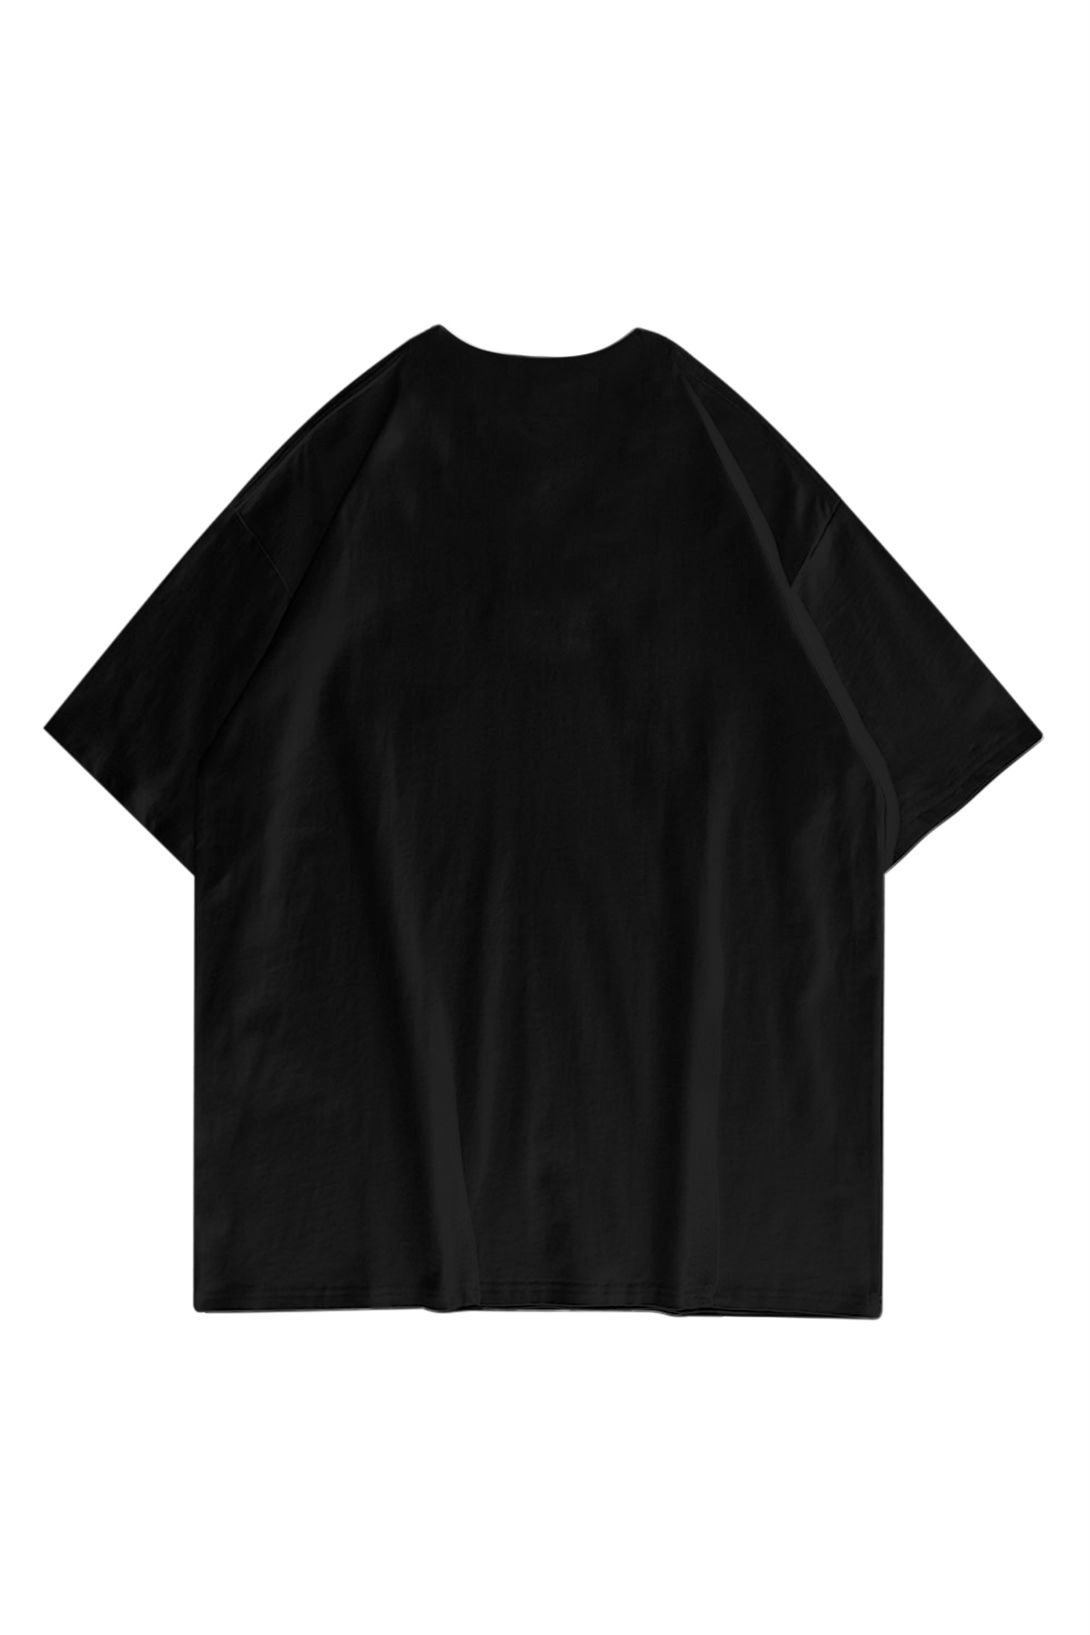 Trendiz Unisex Miles Tails Prower Sonick Siyah Tshirt